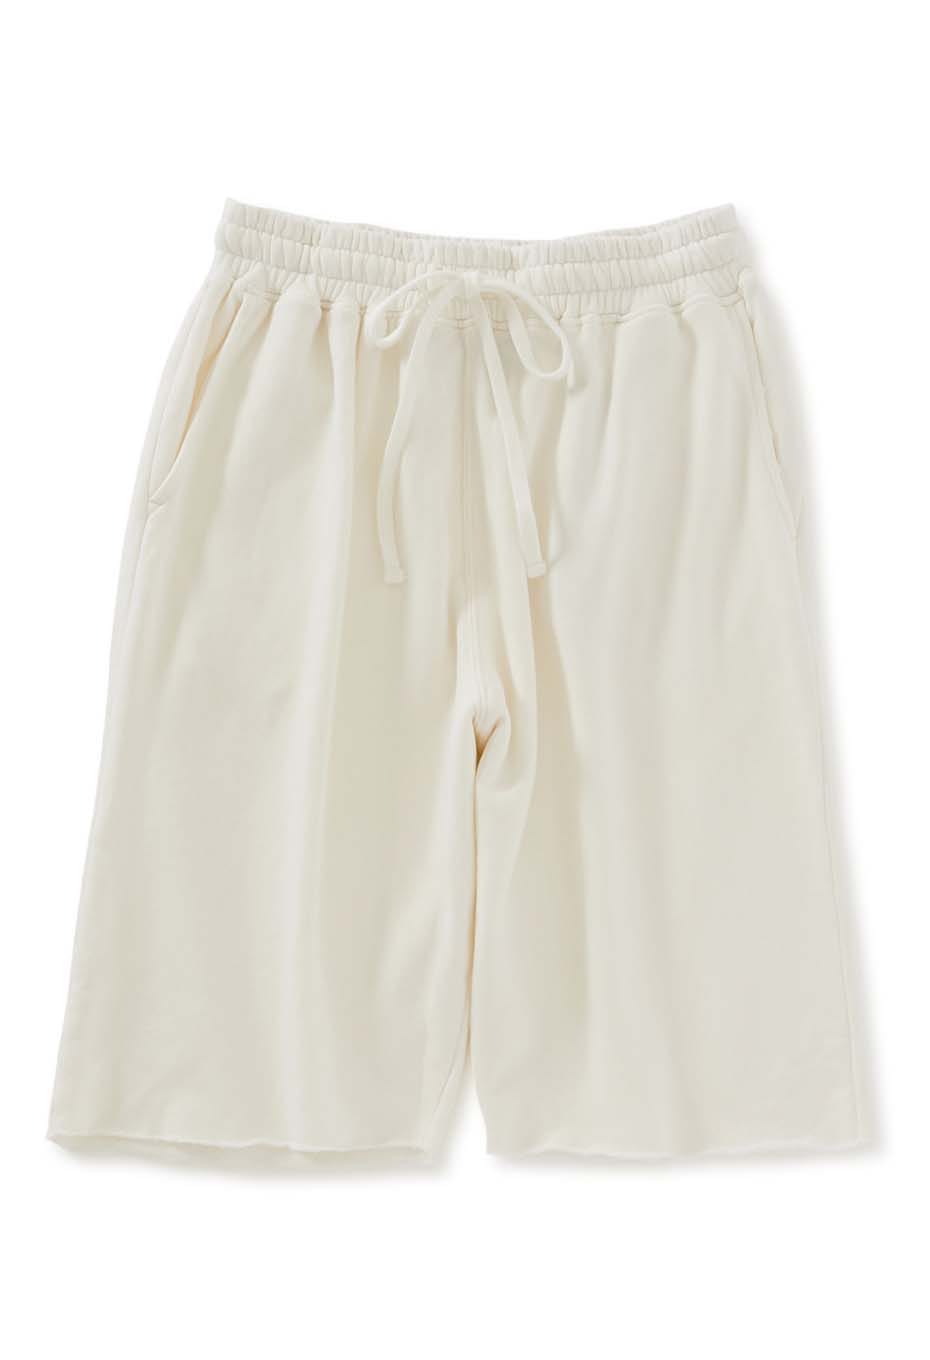 SWEET PANTS Bermuda shorts